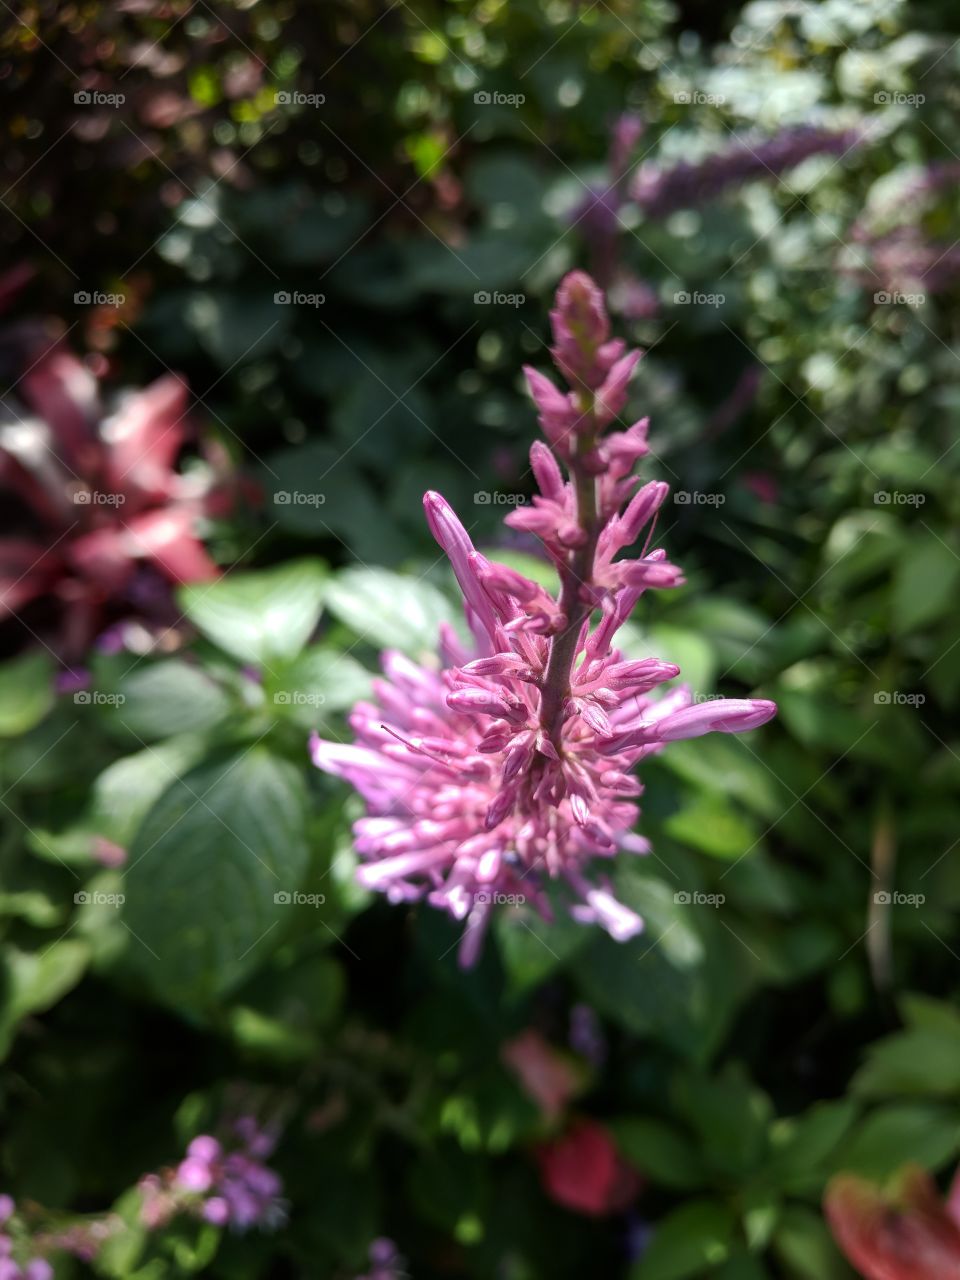 flower at Longwood gardens